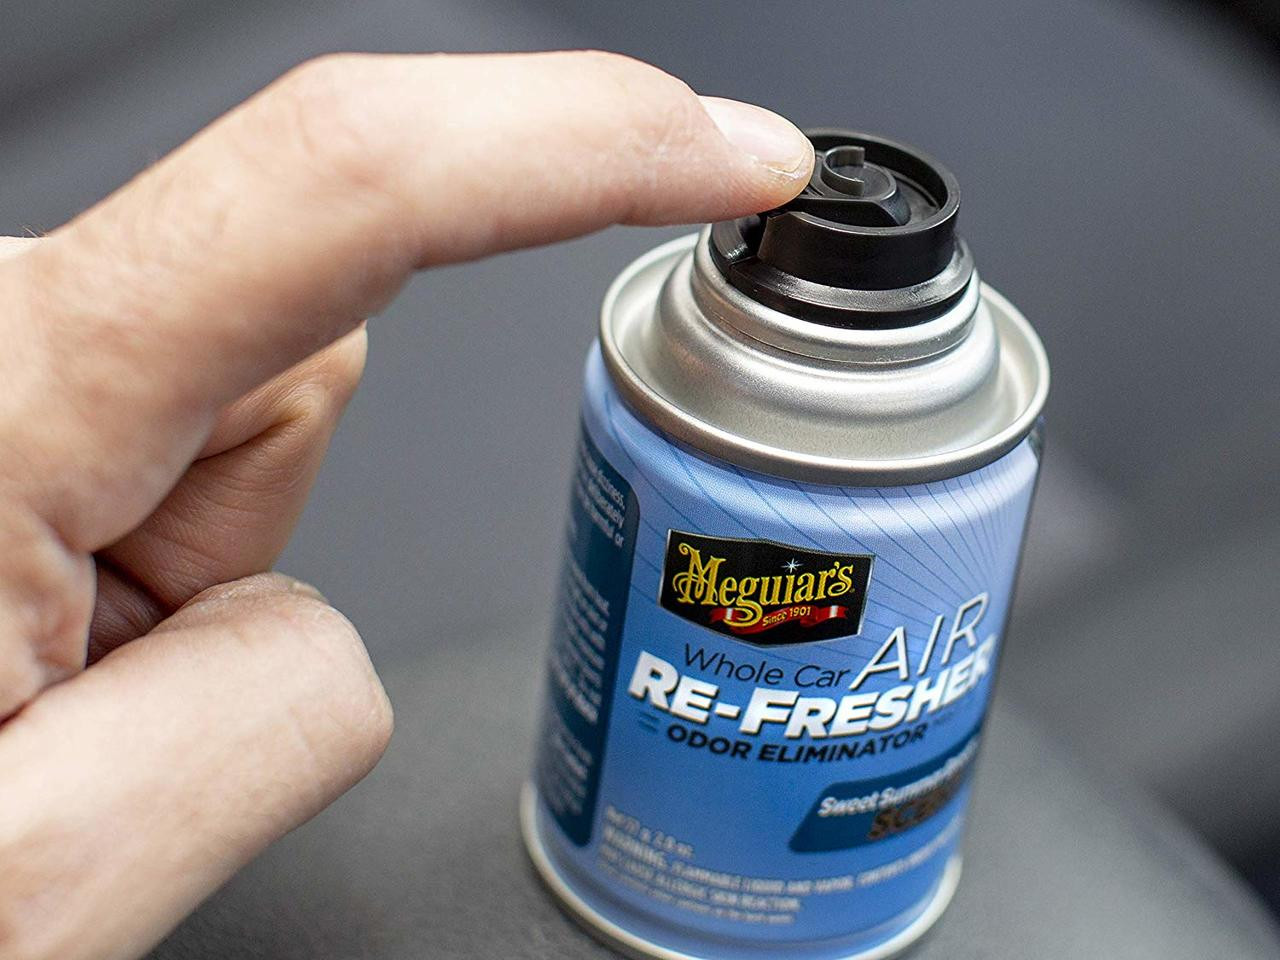 Meguiar's Whole Car Air Re-Fresher Odour Eliminator